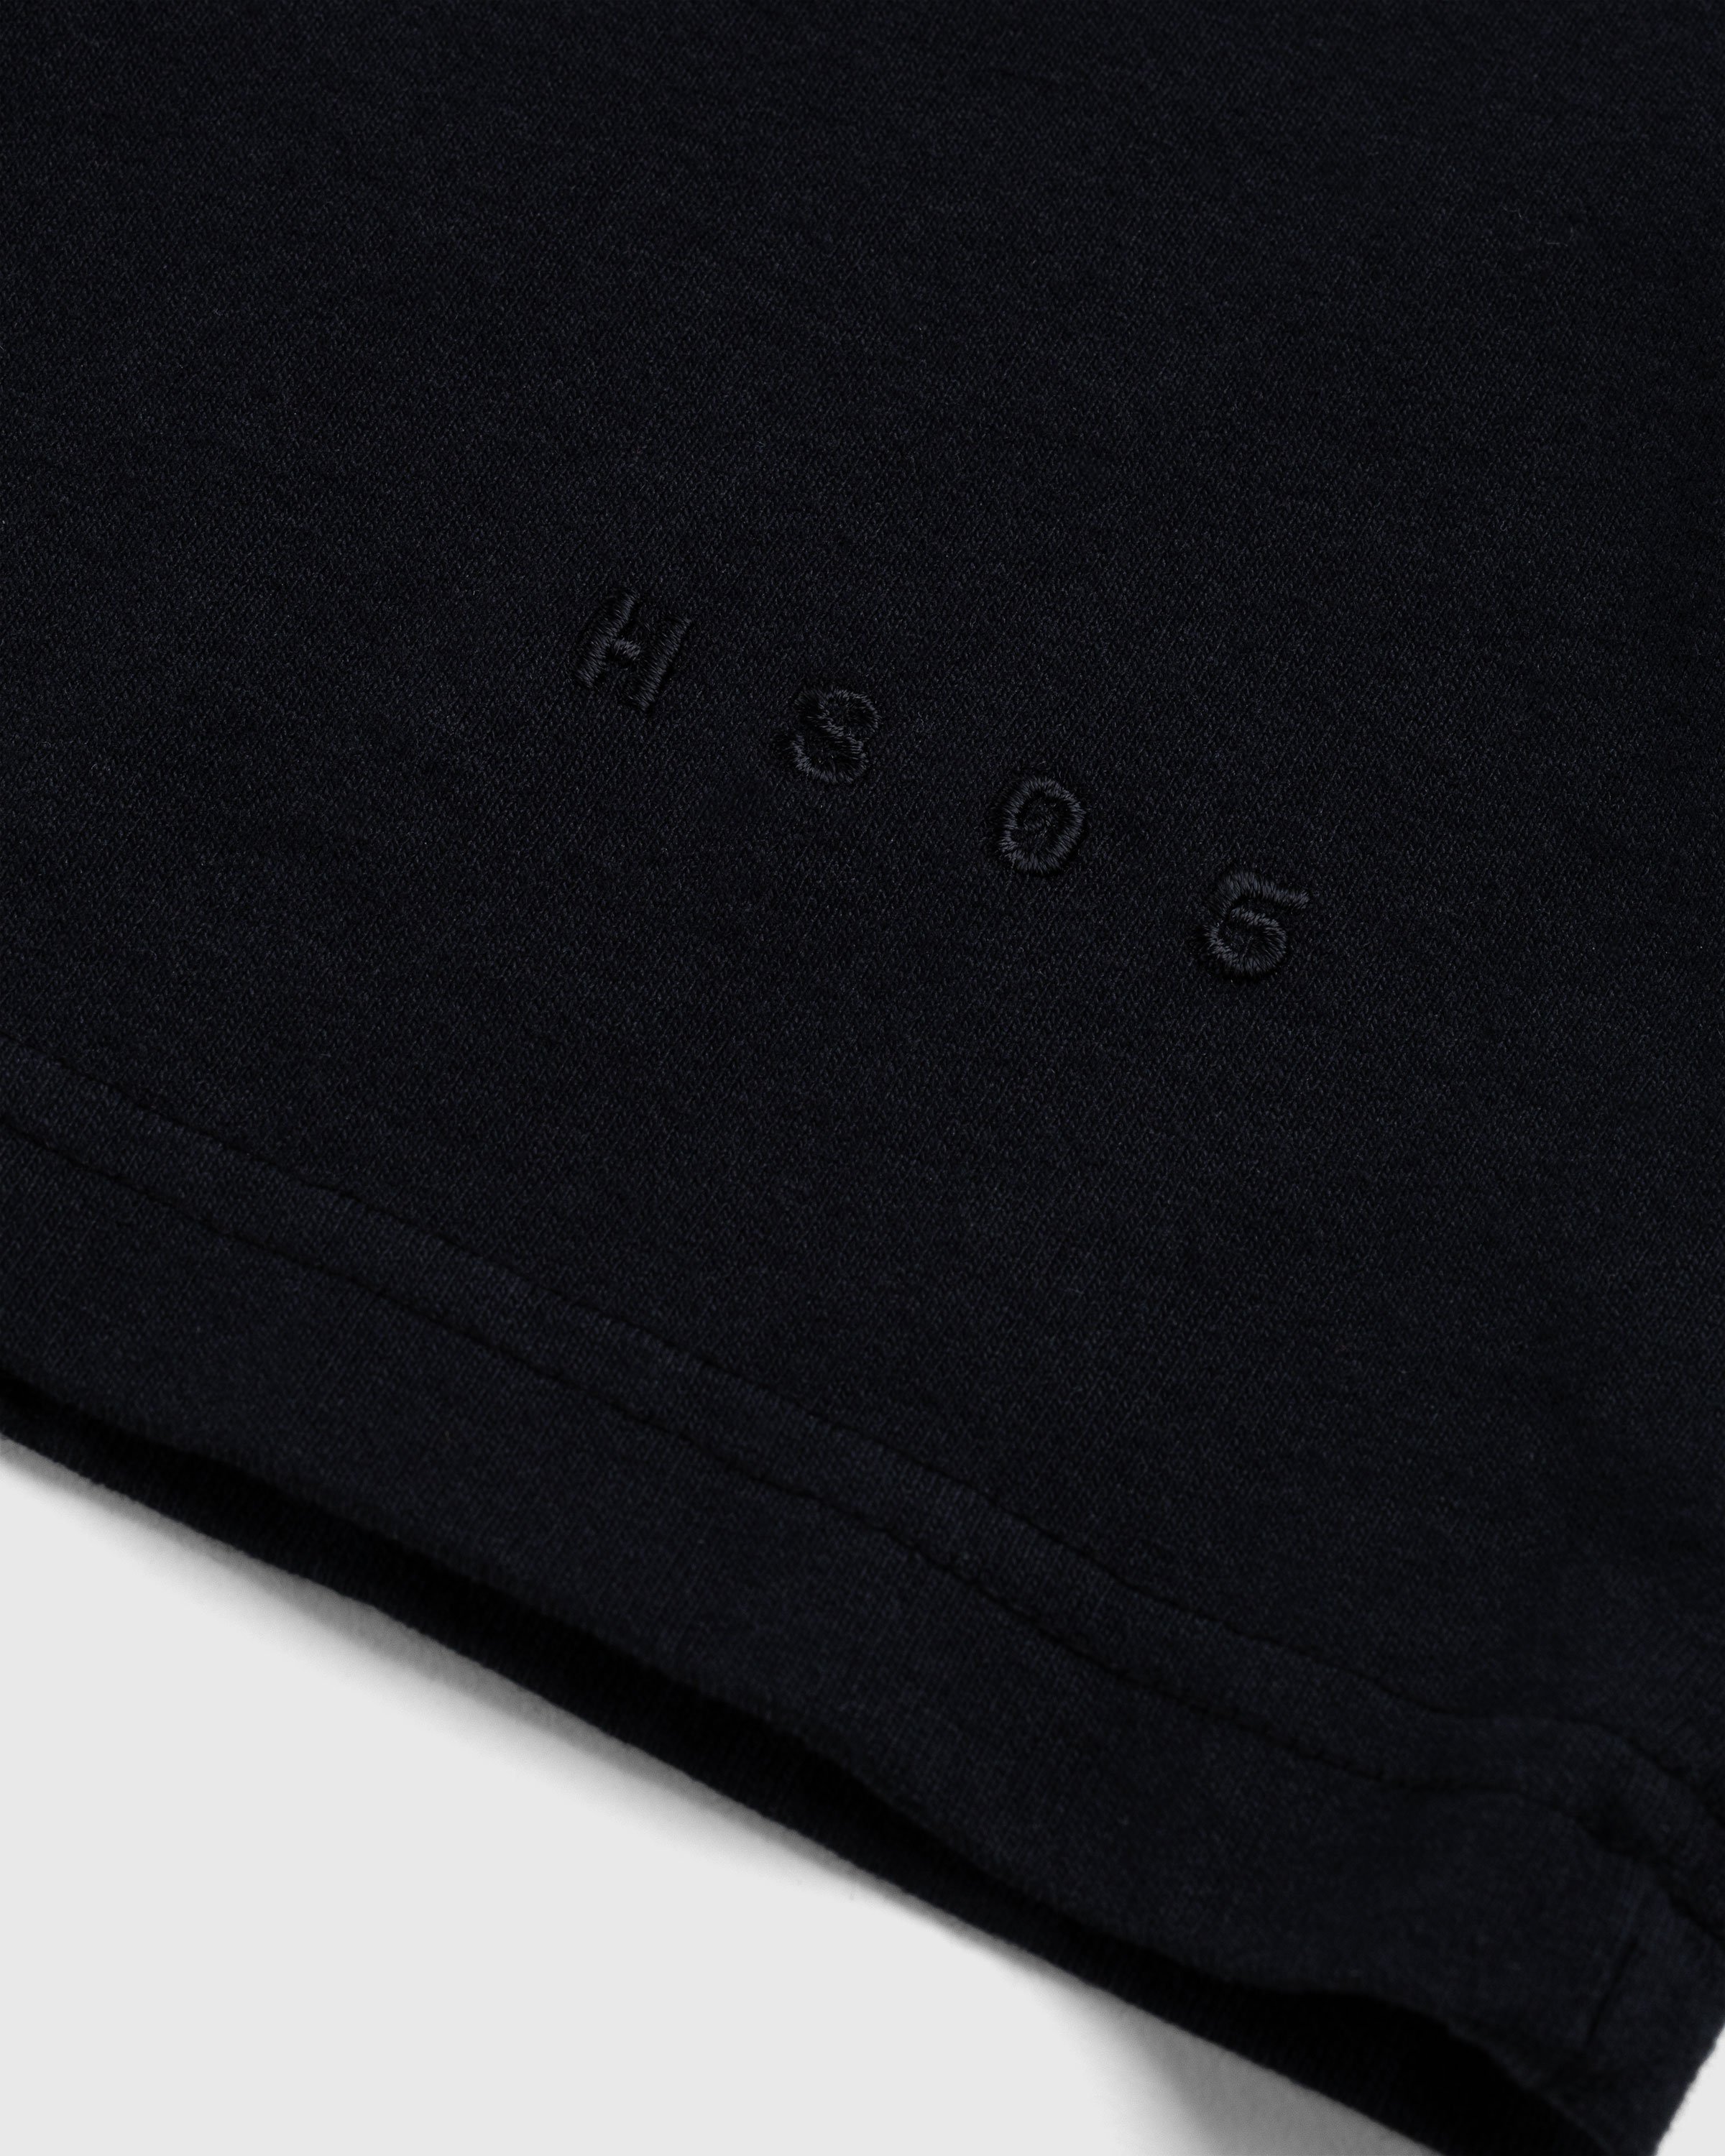 Highsnobiety HS05 - Pigment Dyed Boxy Long Sleeves Jersey Black - Clothing - Black - Image 7